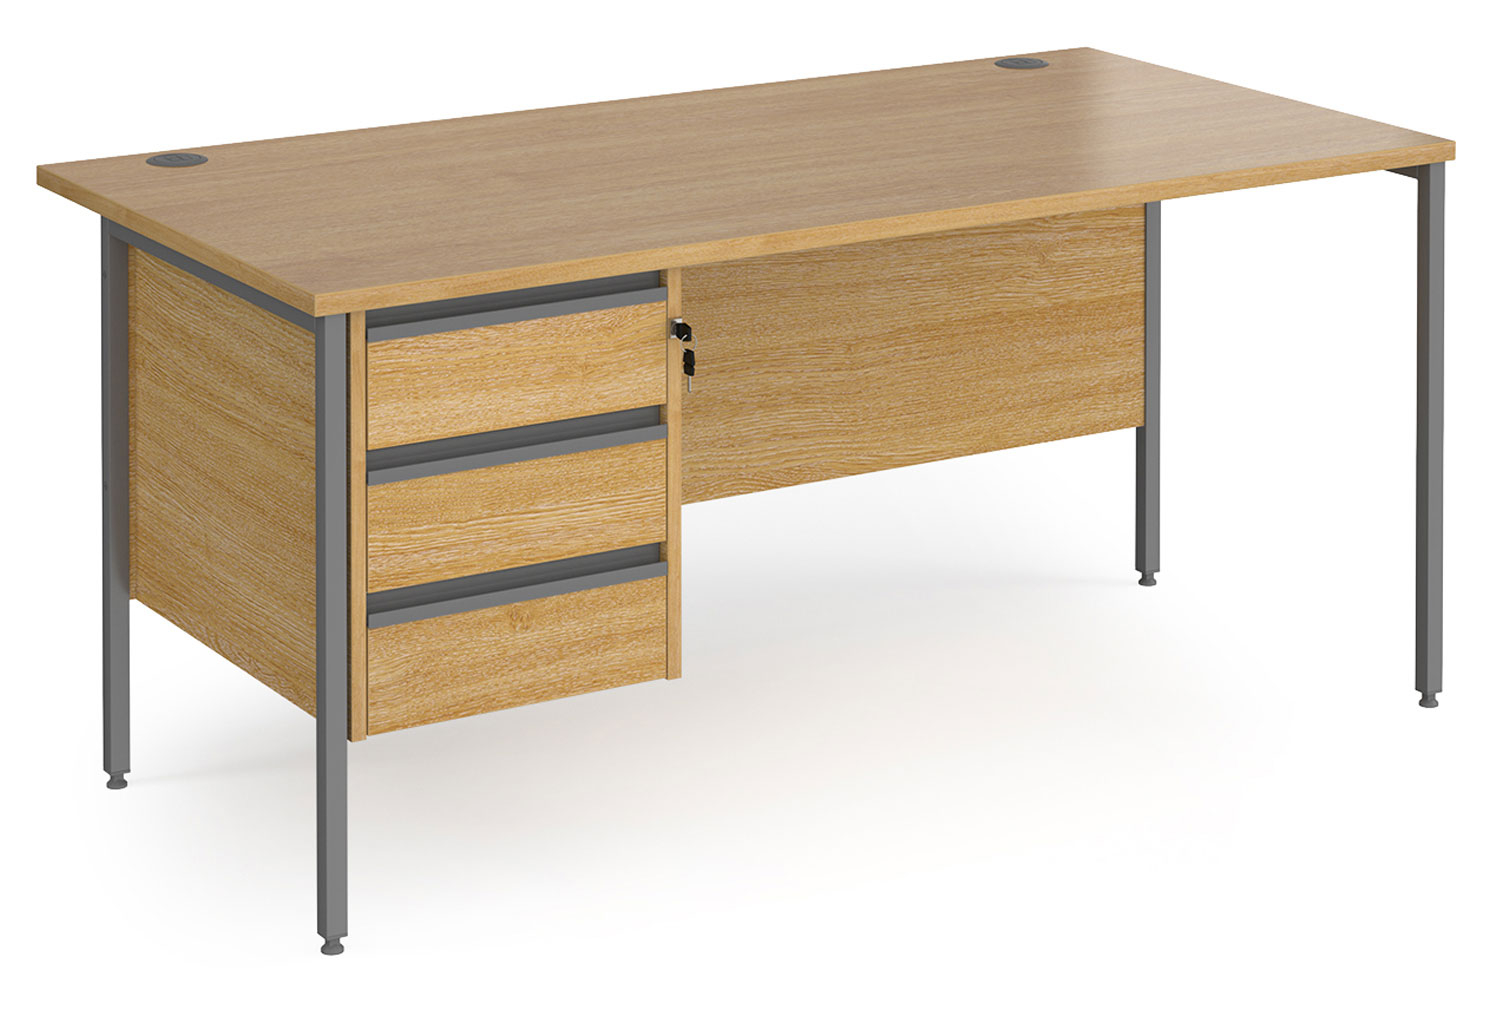 Value Line Classic+ Rectangular H-Leg Office Desk 3 Drawers (Graphite Leg), 160wx80dx73h (cm), Oak, Express Delivery